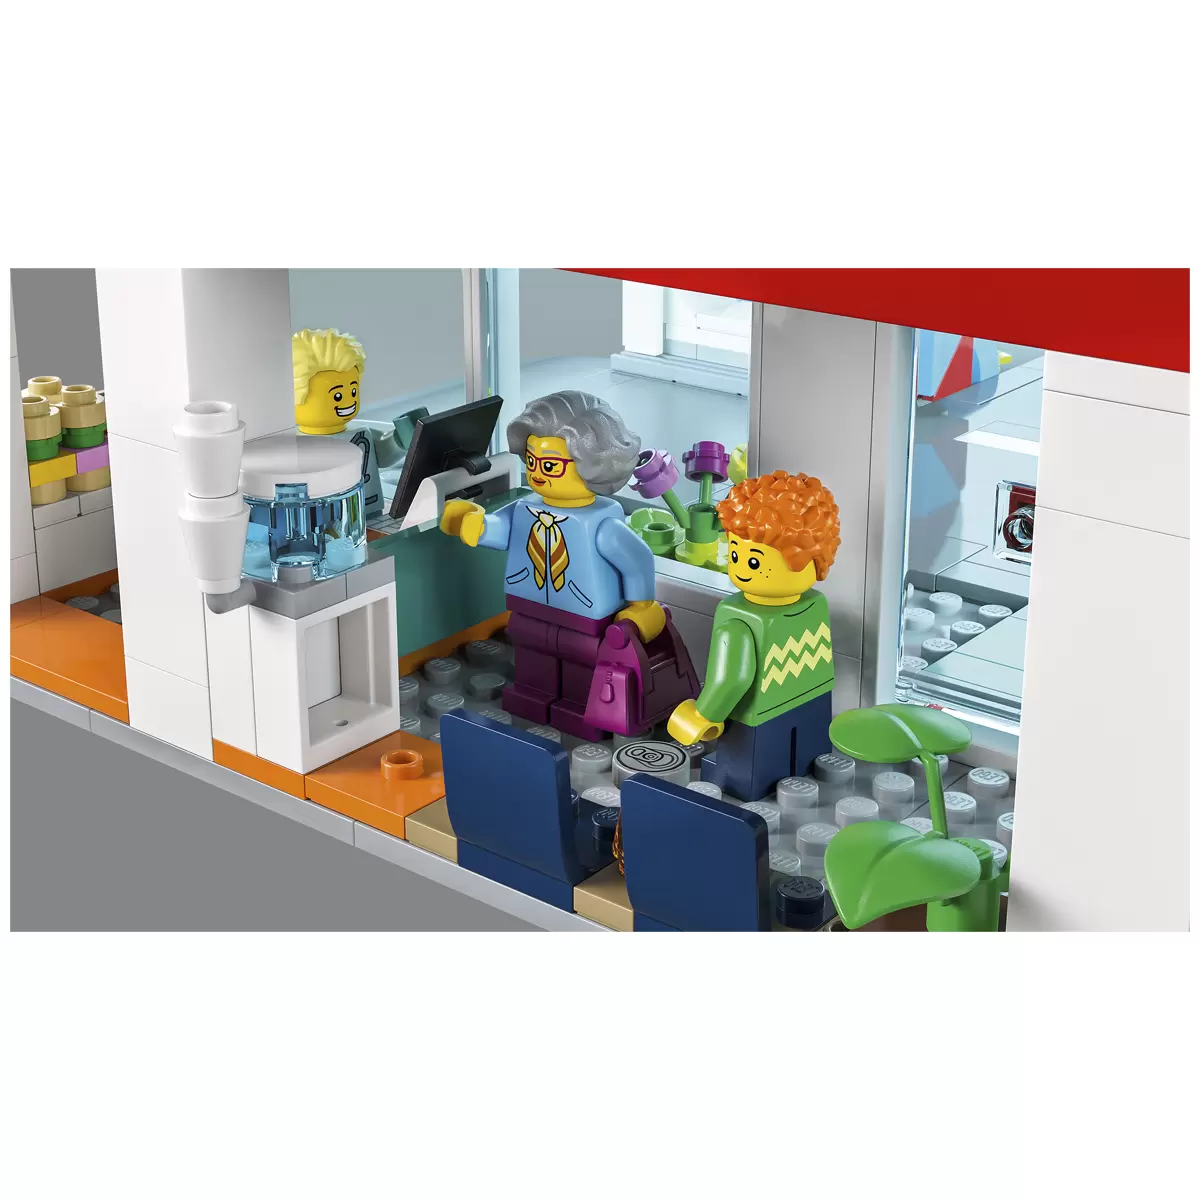 LEGO City Hospital 60330